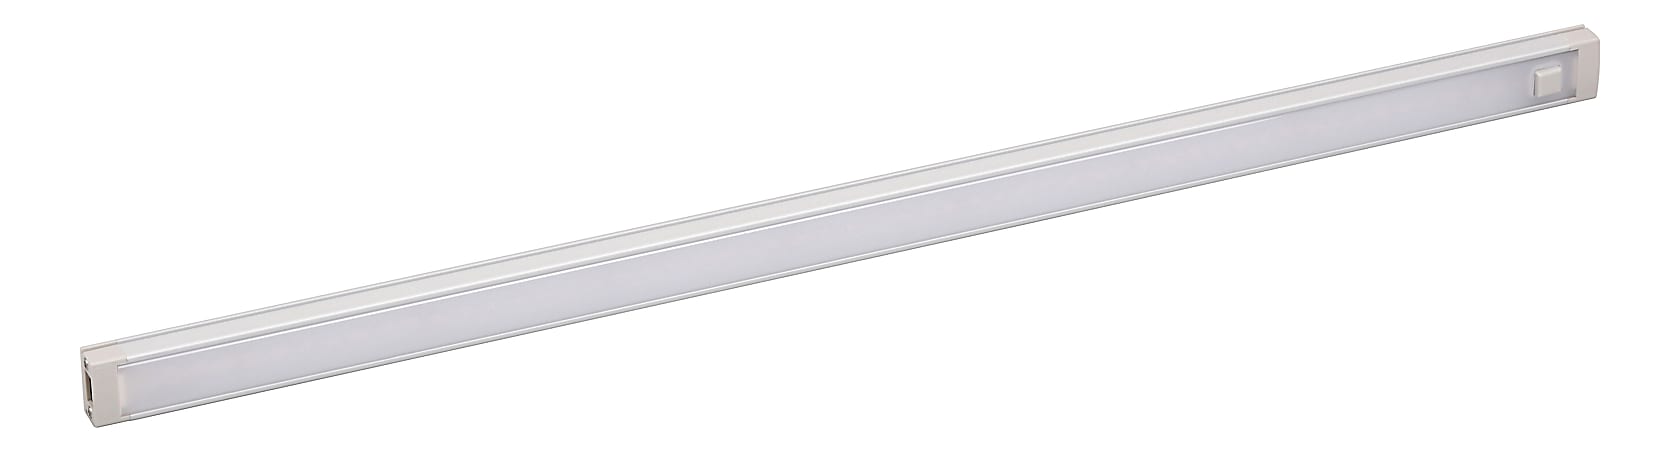 Black+decker 9 in. LED Warm White 1-Bar Rechargeable Under Cabinet Lighting Kit LEDUC9-1REC